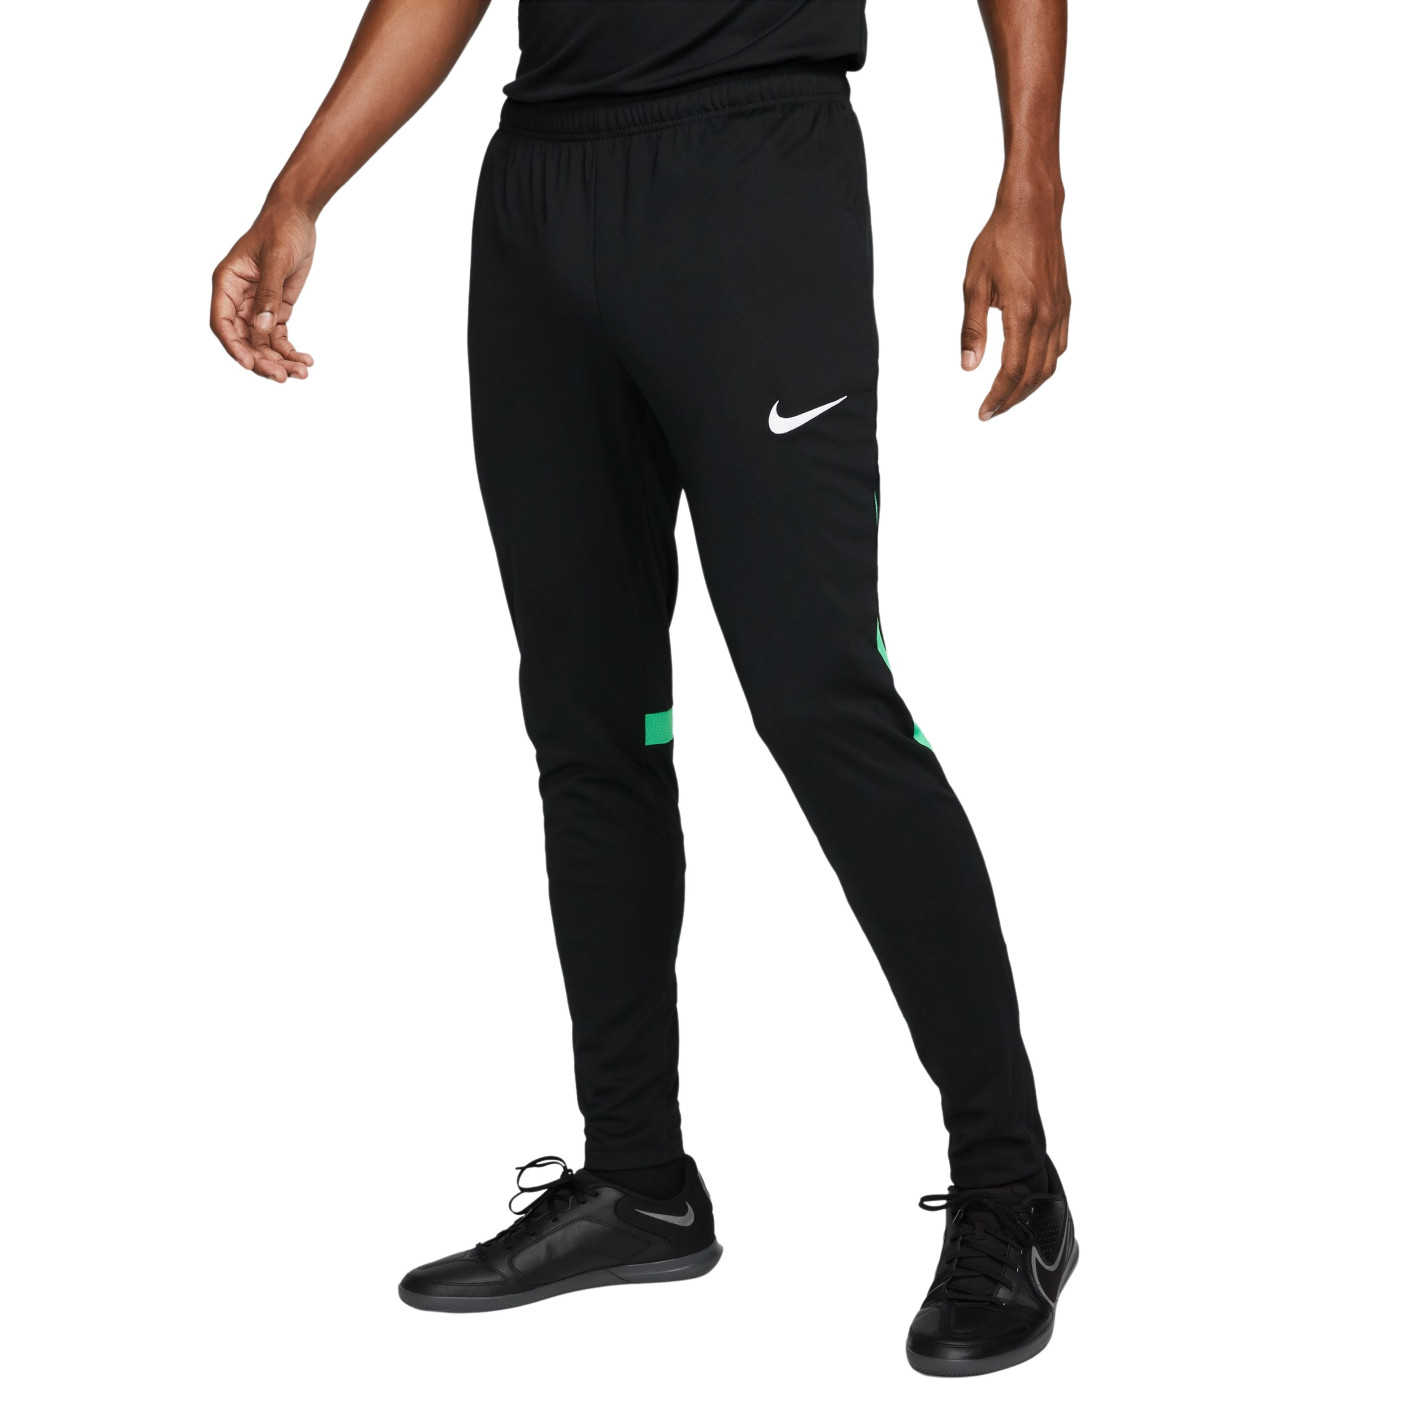 Pantalon d'entraînement Nike Academy Pro noir vert